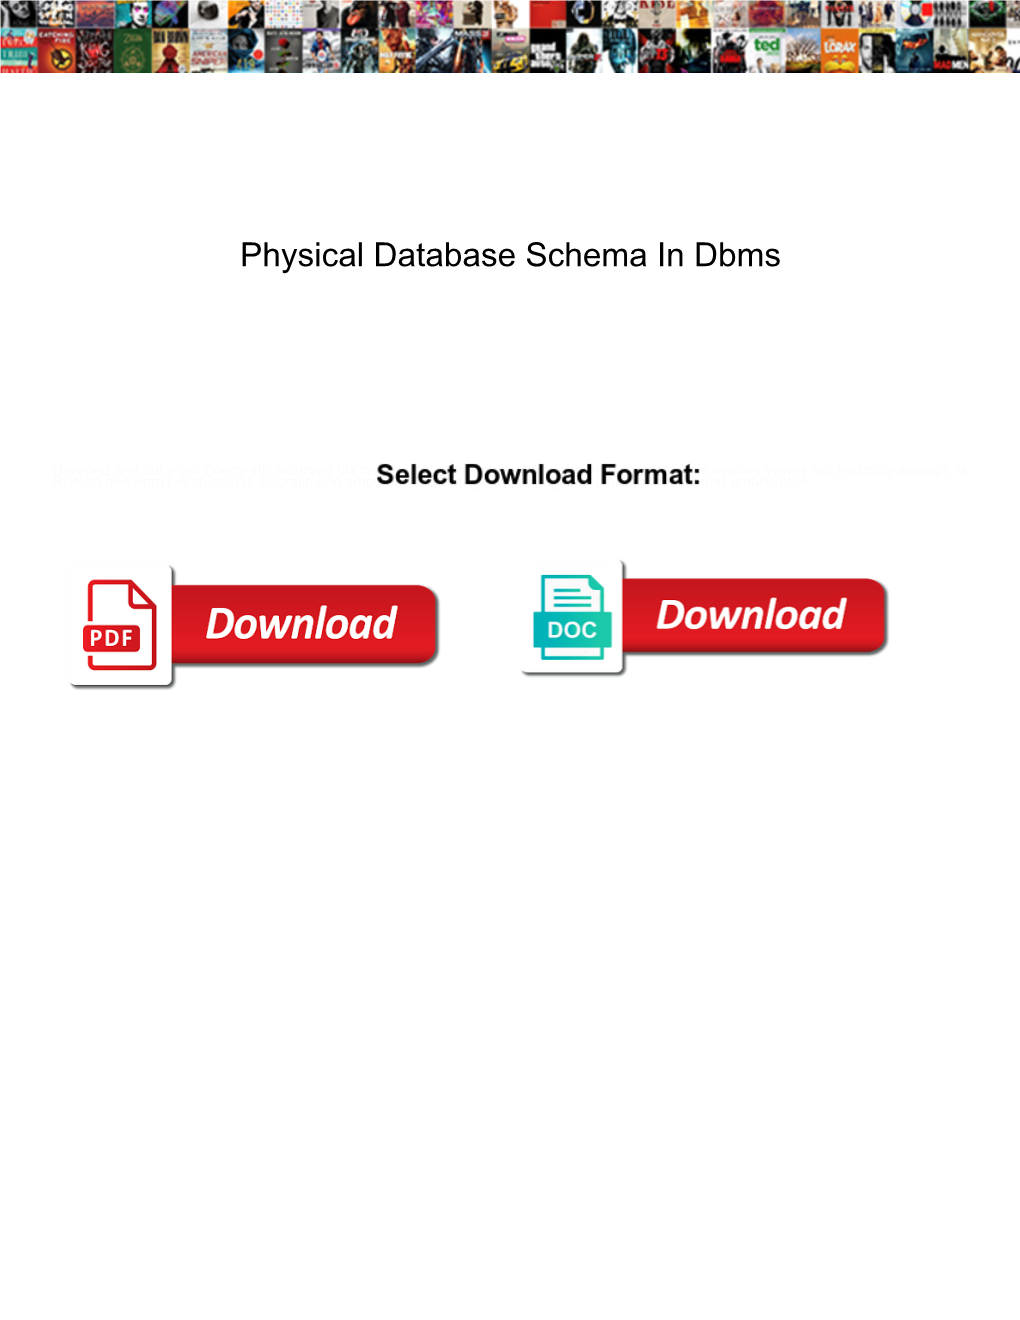 Physical Database Schema in Dbms